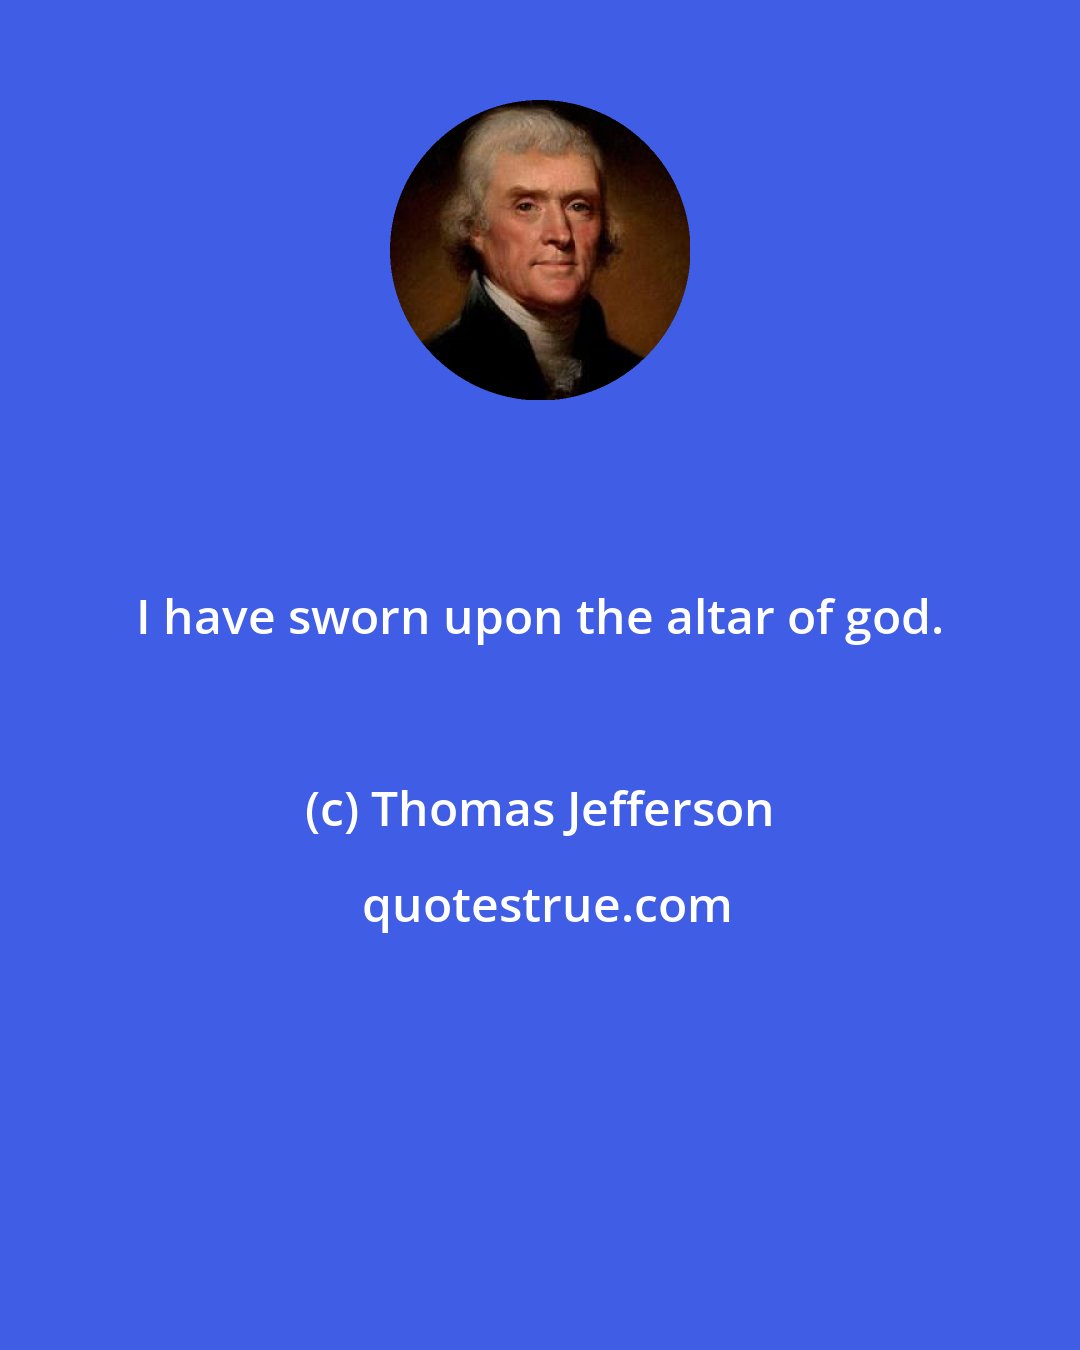 Thomas Jefferson: I have sworn upon the altar of god.